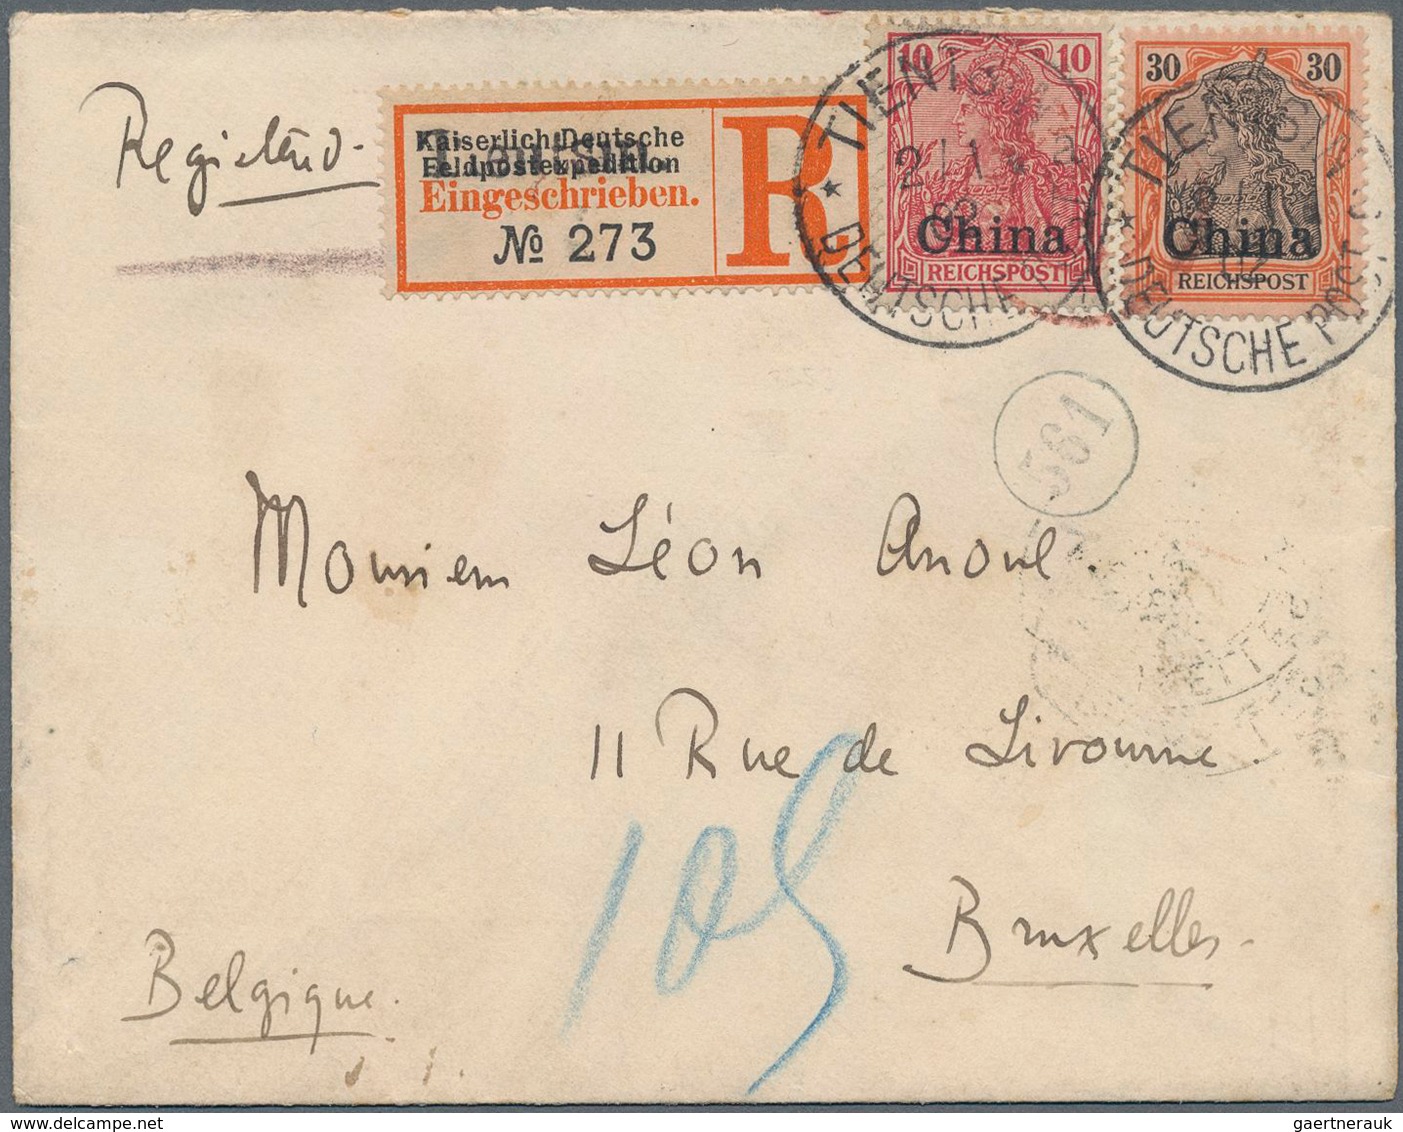 Deutsche Post In China: 1902. Registered Envelope Addressed To Belgium Bearing German China SG 24, 1 - Chine (bureaux)